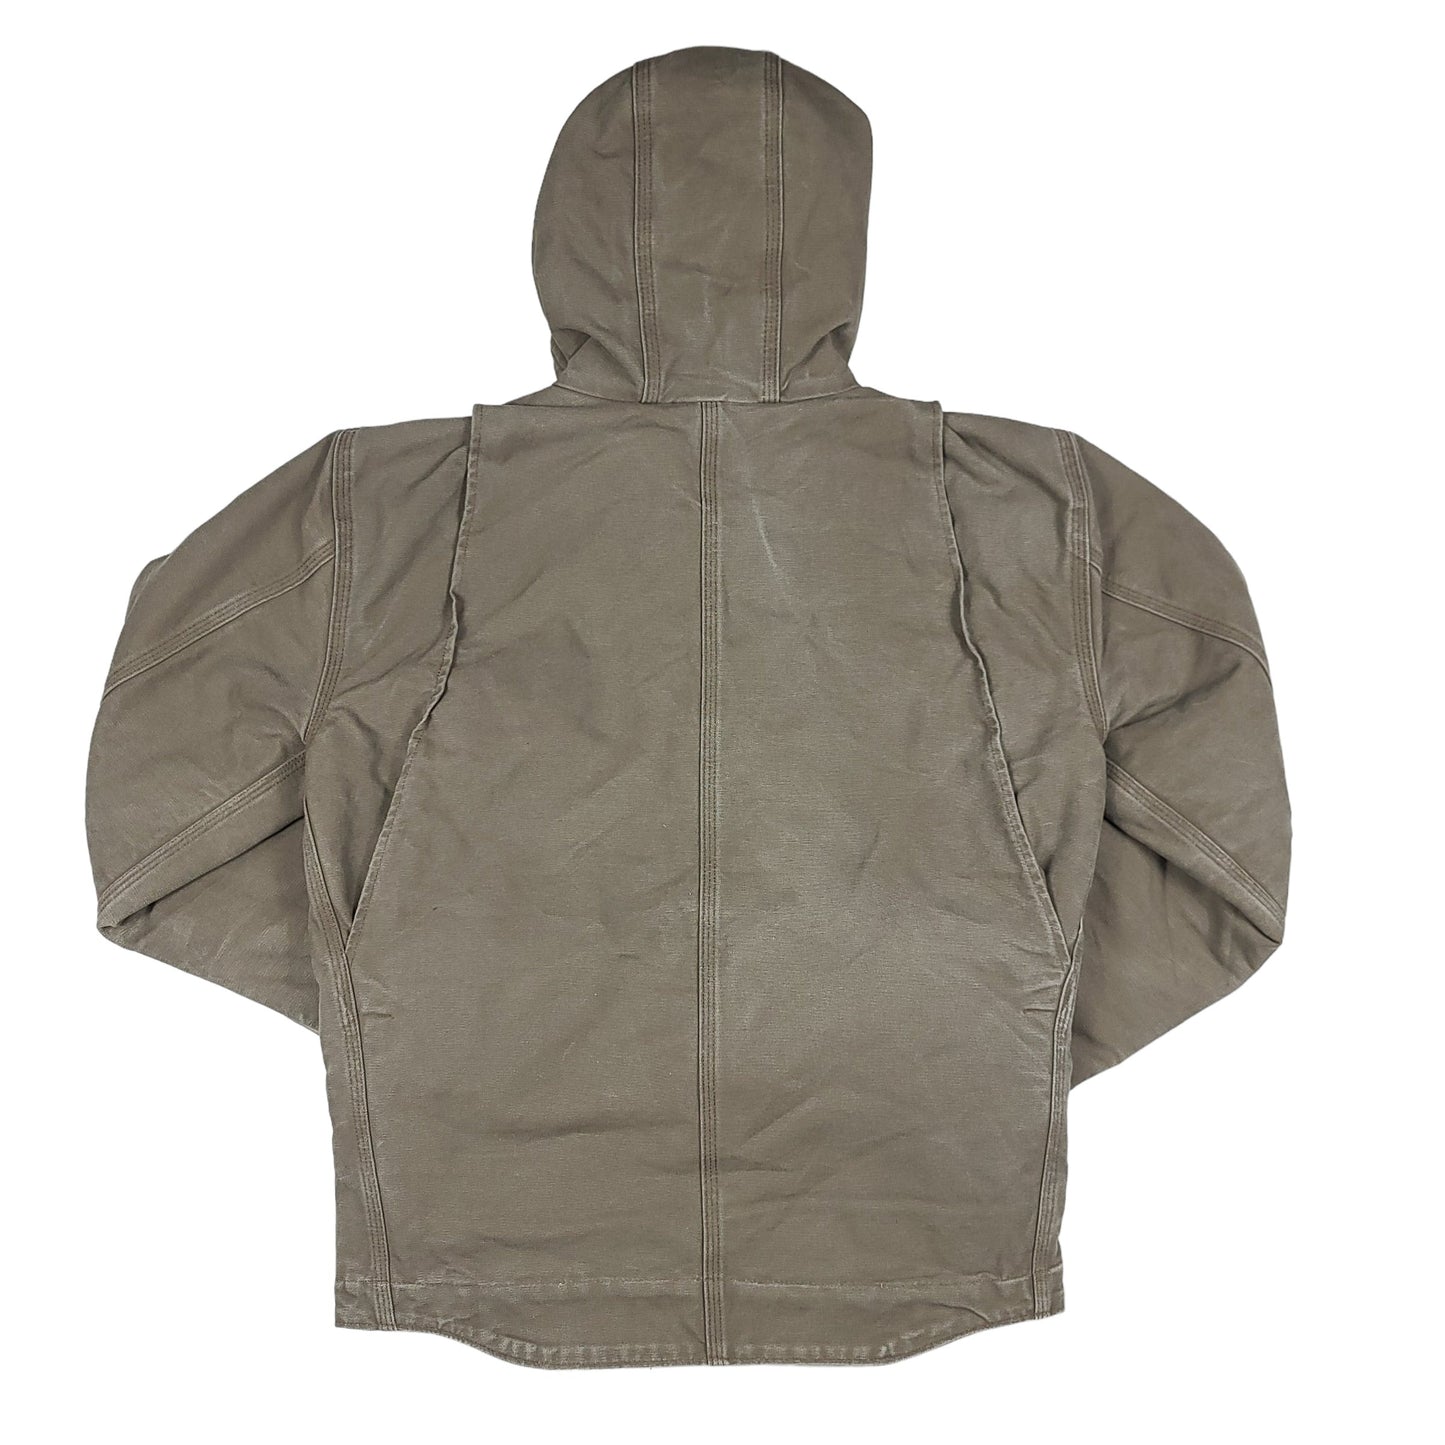 Carhartt Brown Sherpa Lined Hooded Jacket (Broken Zipper)